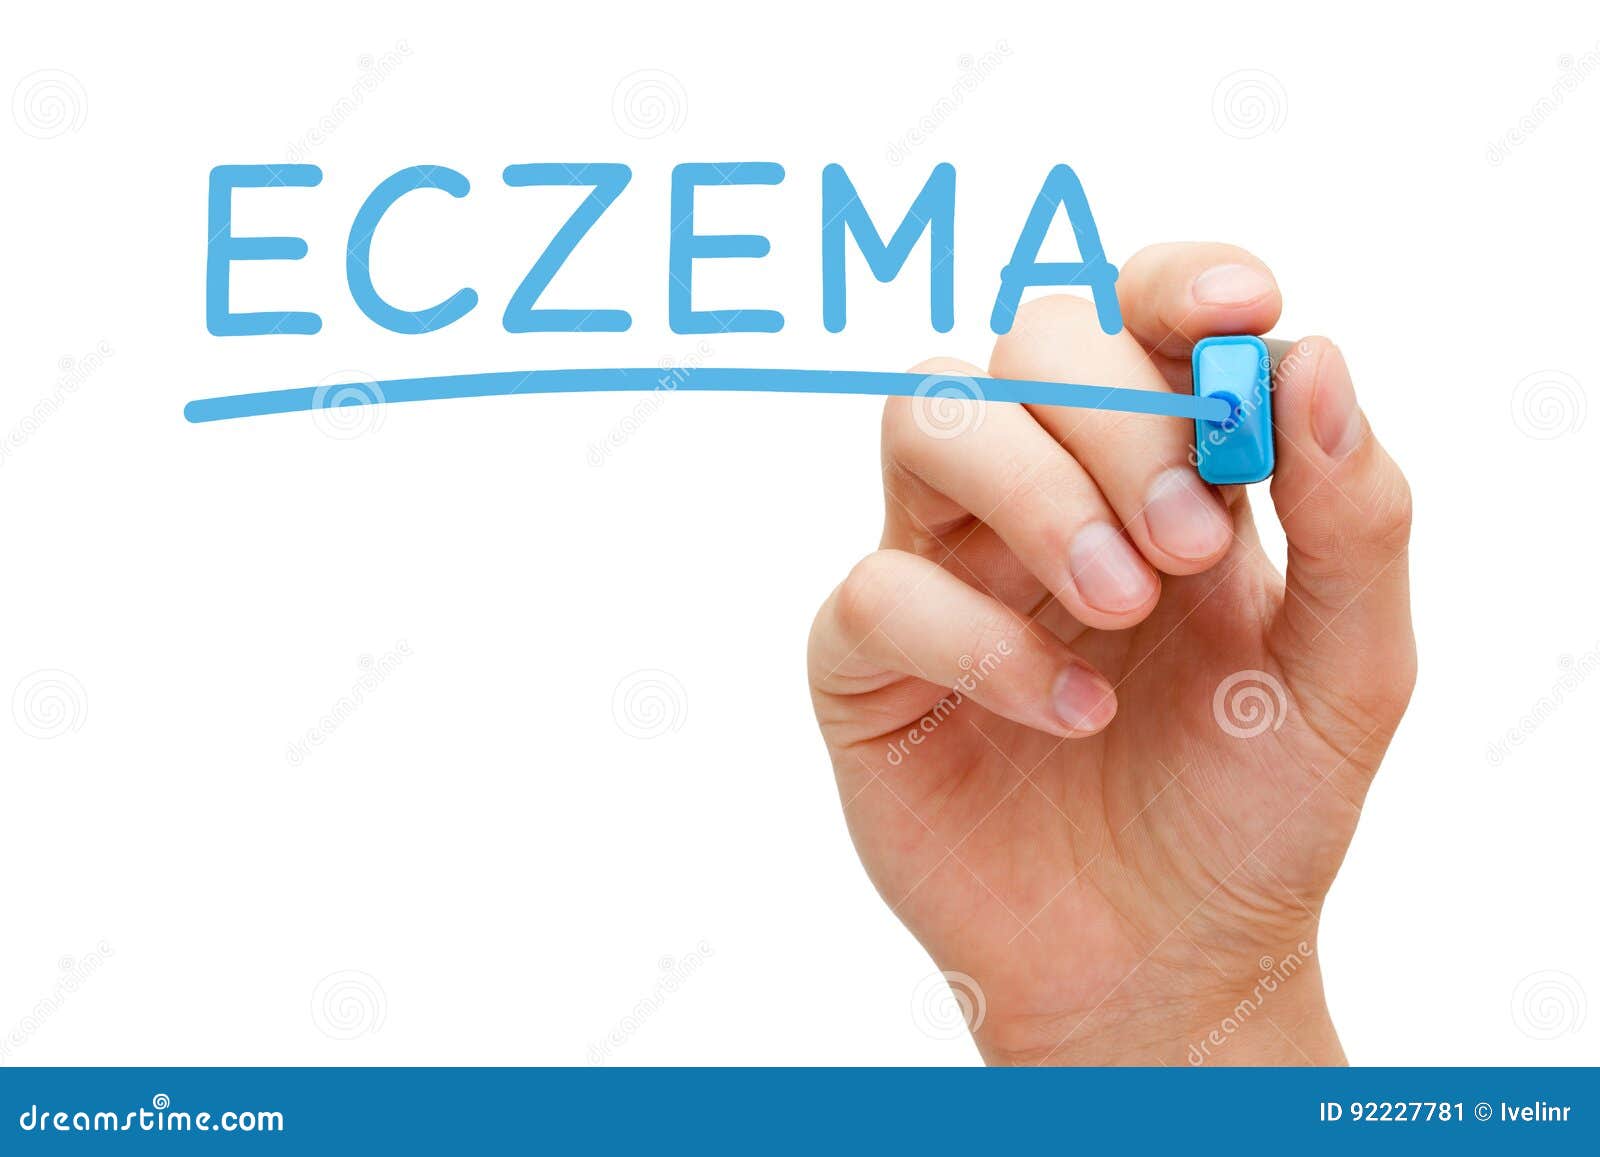 eczema handwritten with blue marker